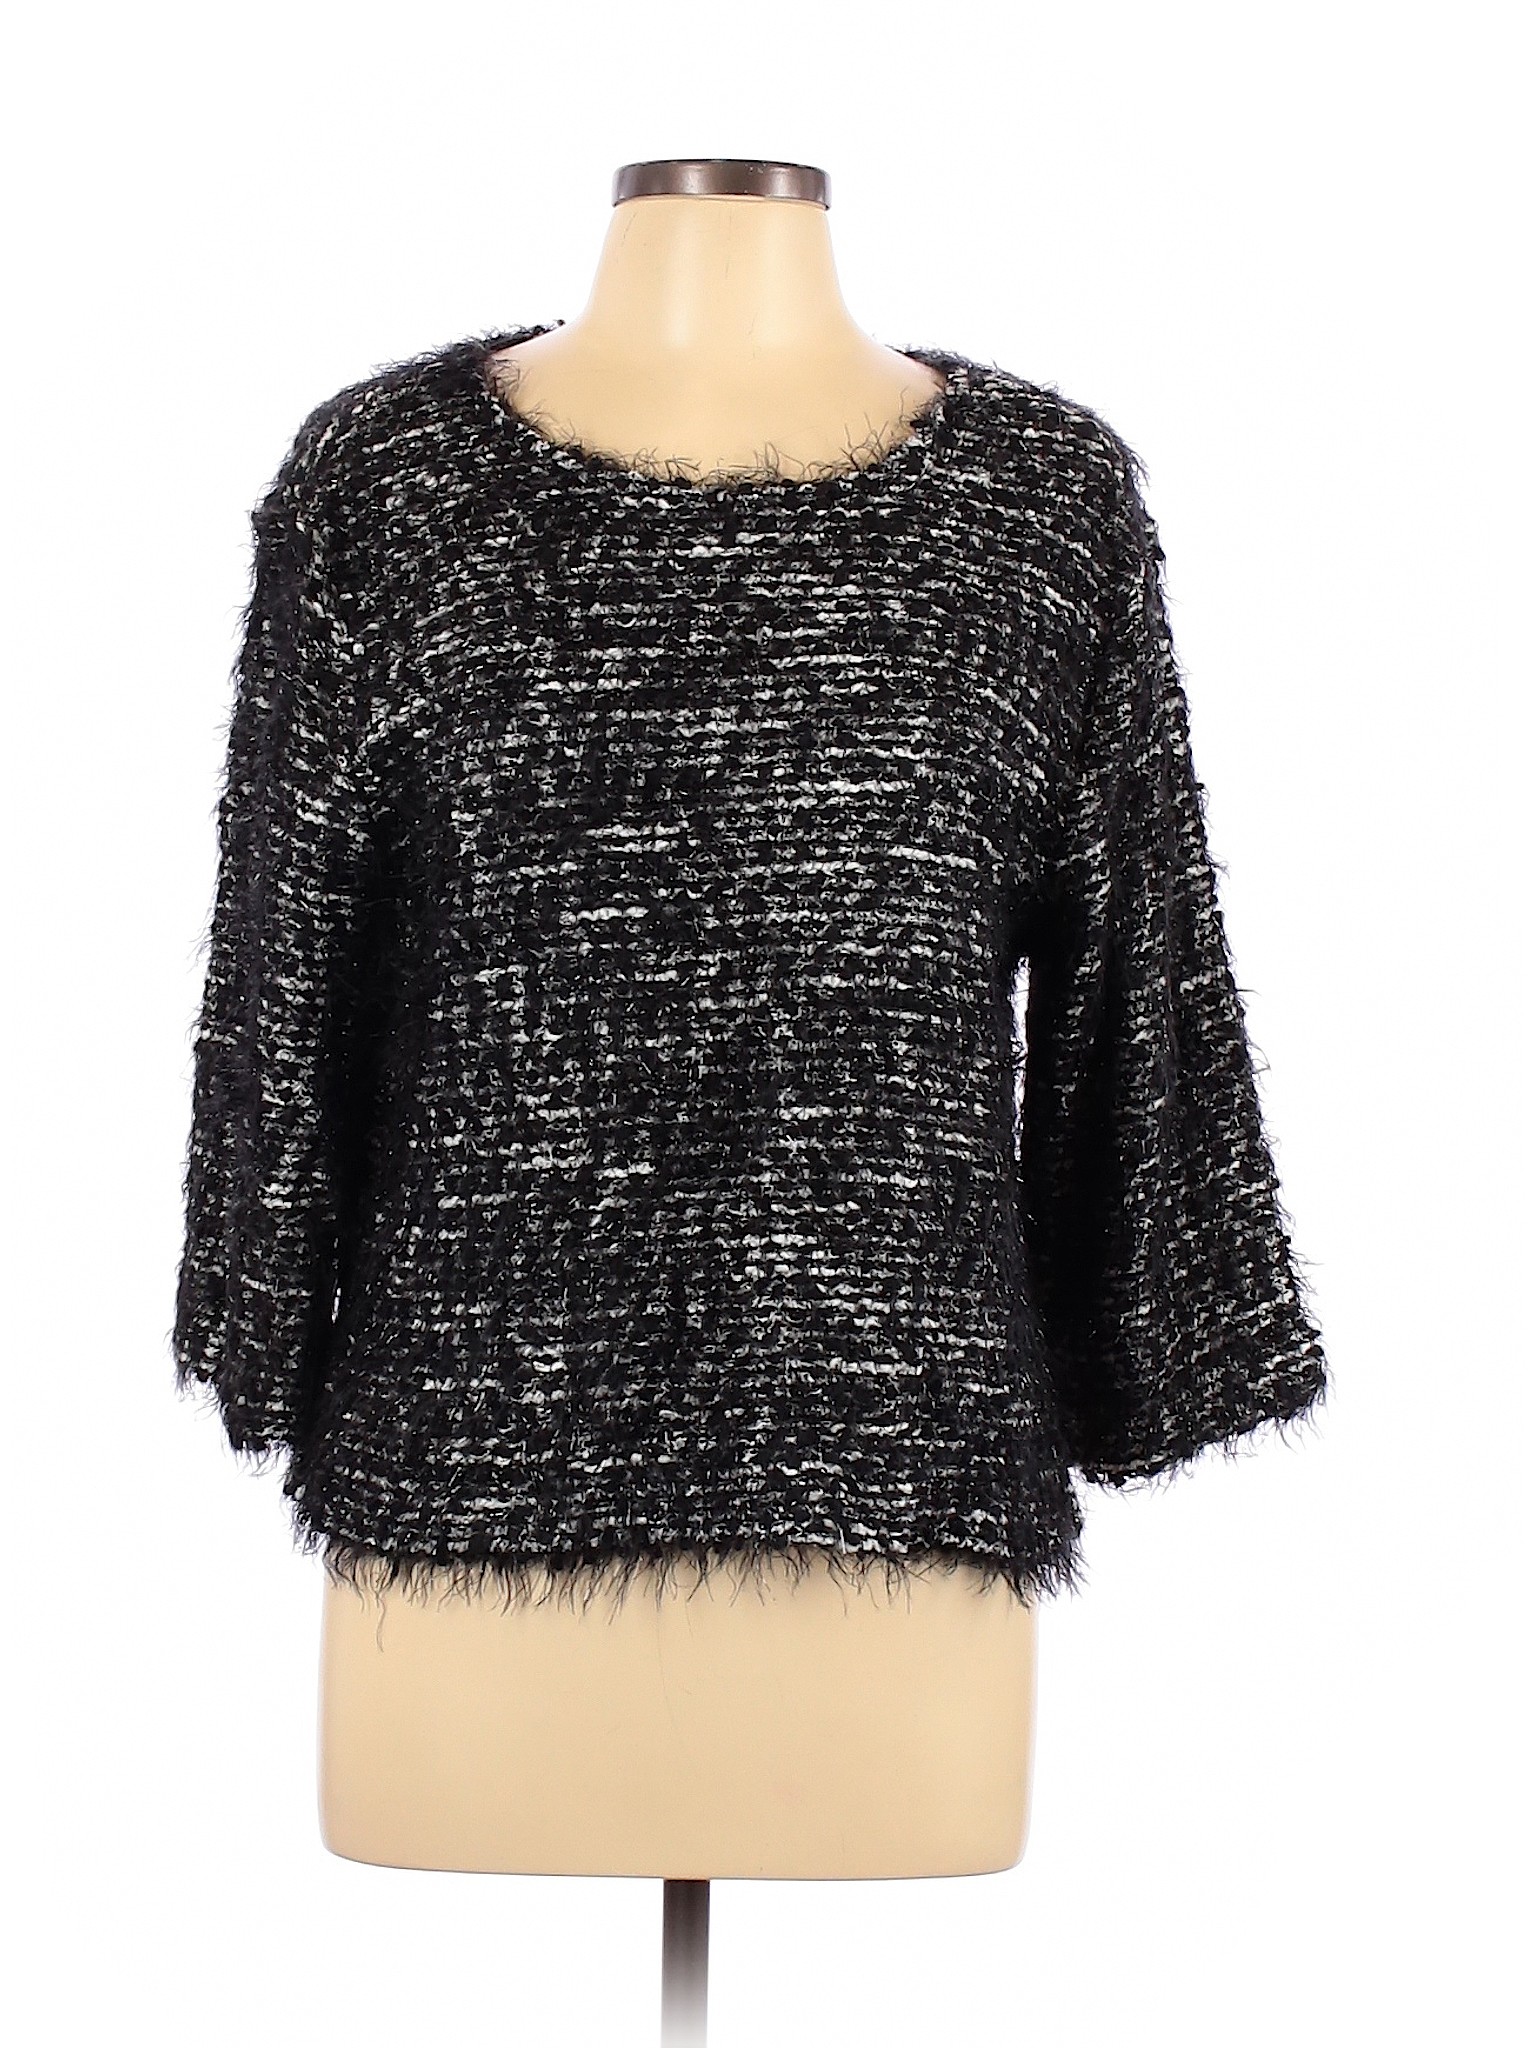 Vince Camuto Women Black Pullover Sweater L | eBay